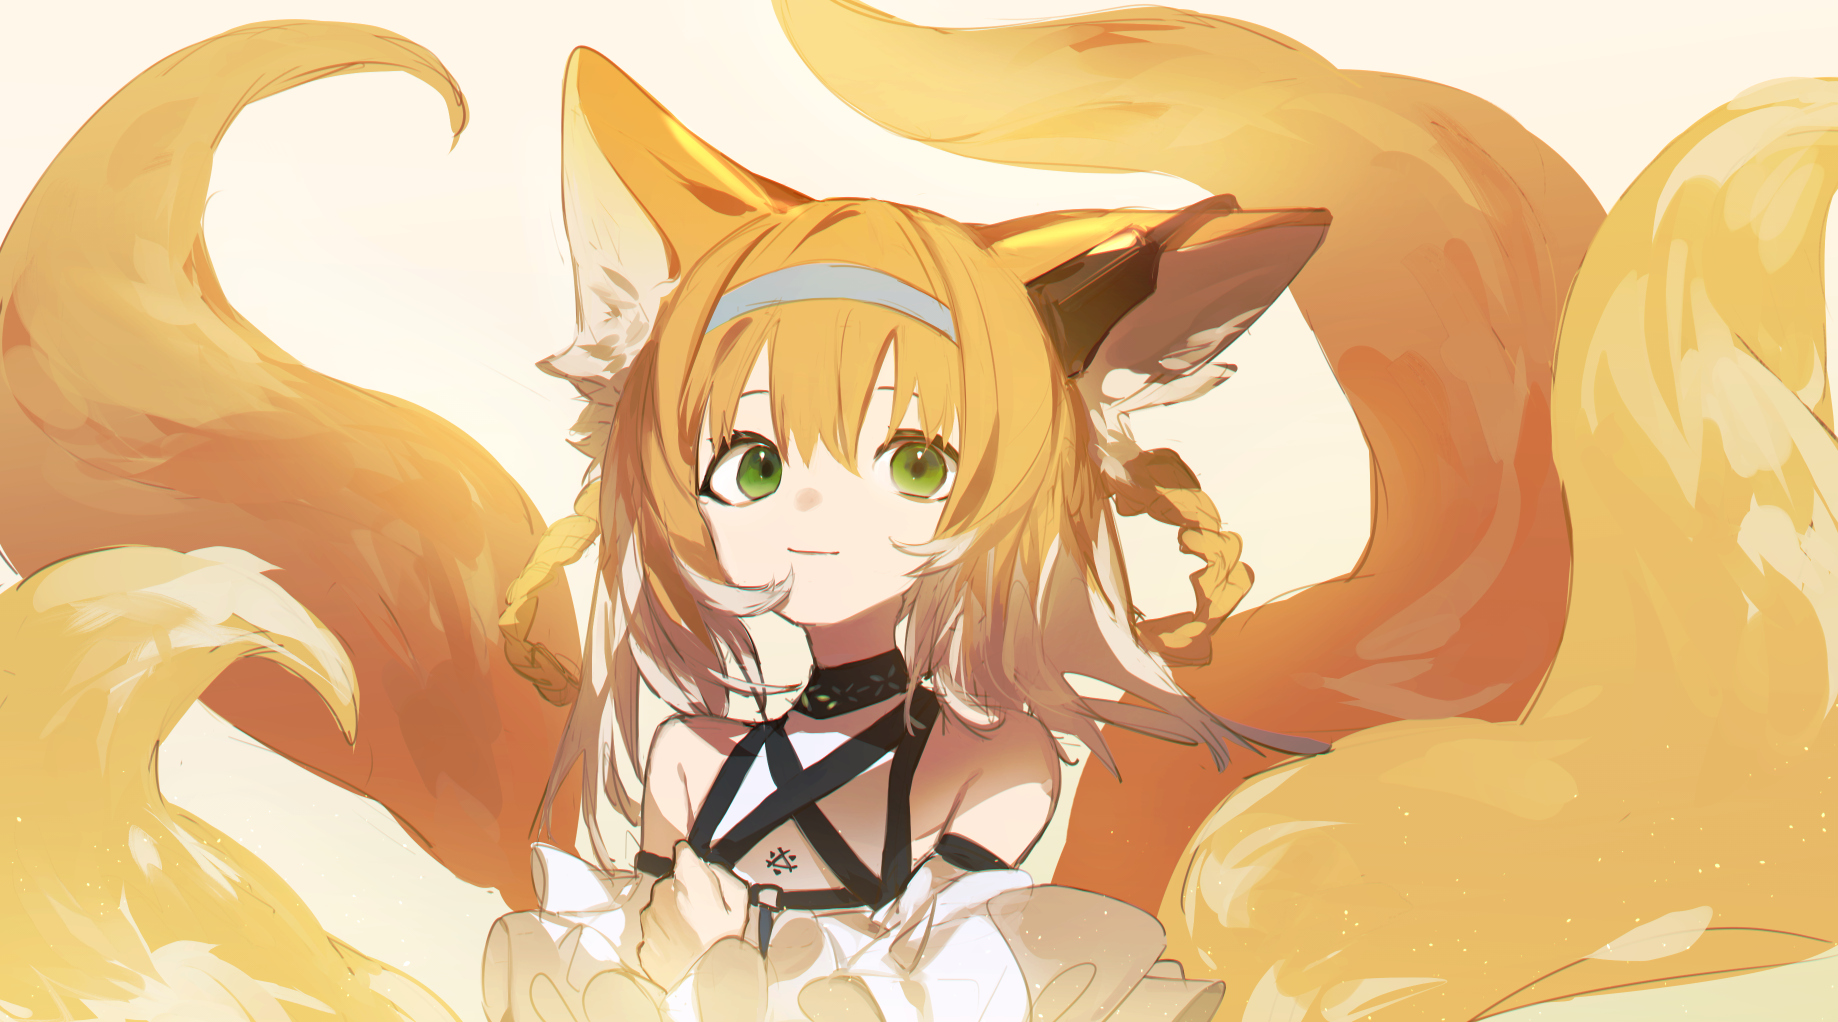 Wallpaper anime girl with fox ears